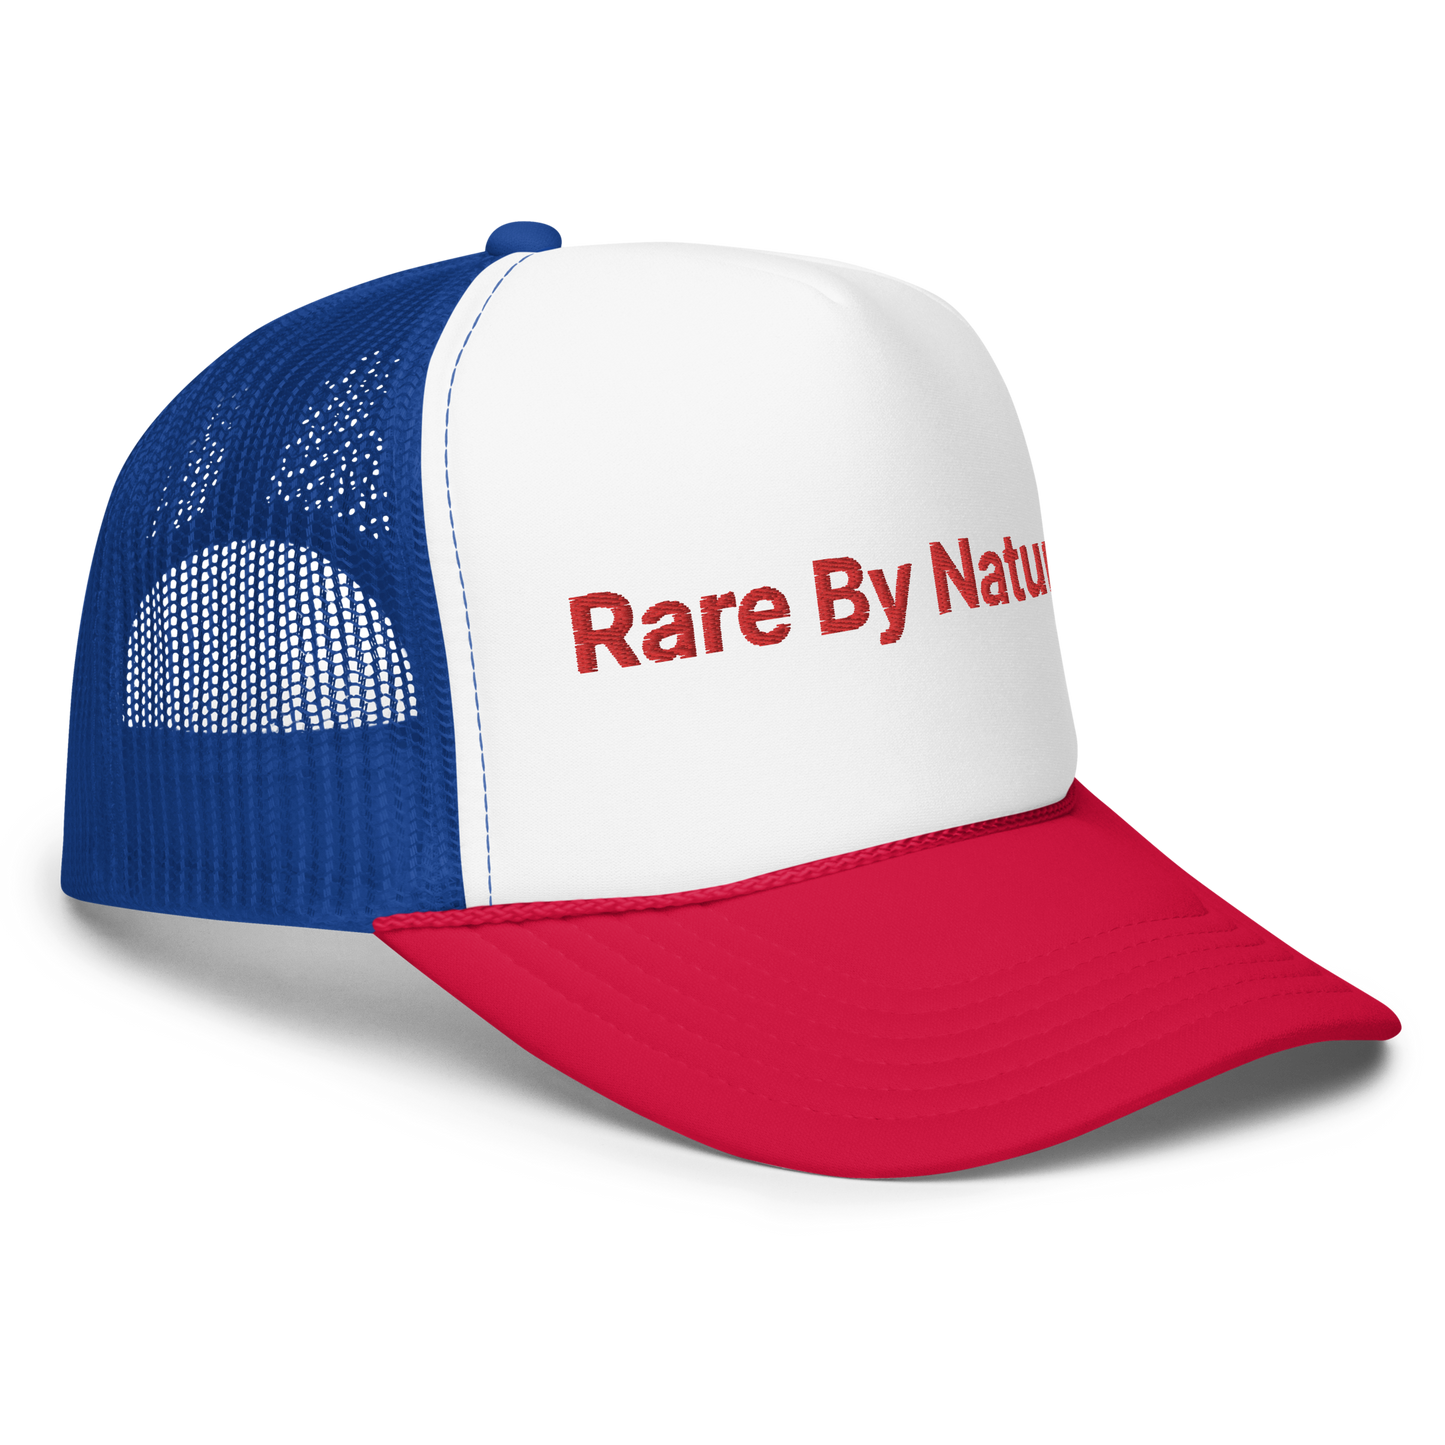 Rare By Nature Foam trucker hat